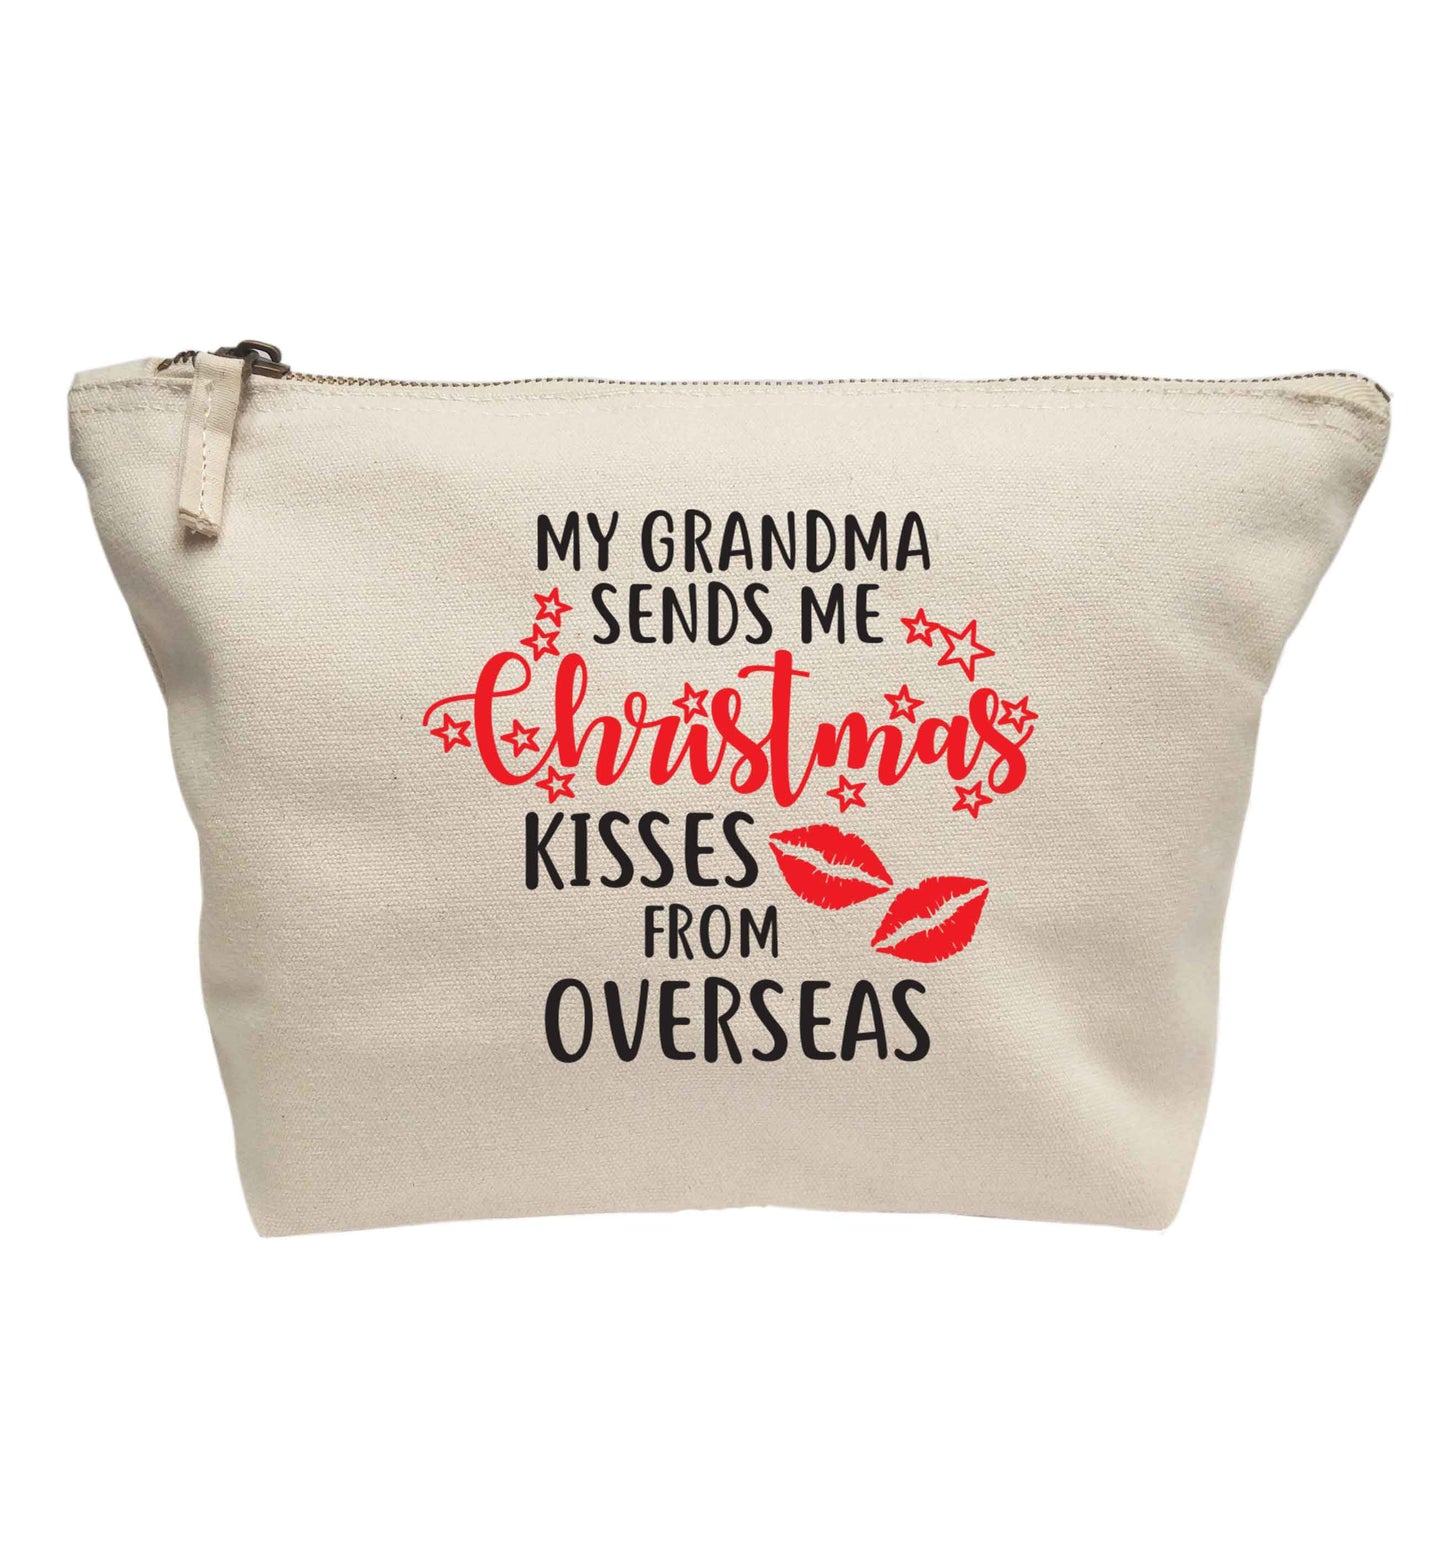 My Grandma sends me Christmas kisses from overseas | Makeup / wash bag